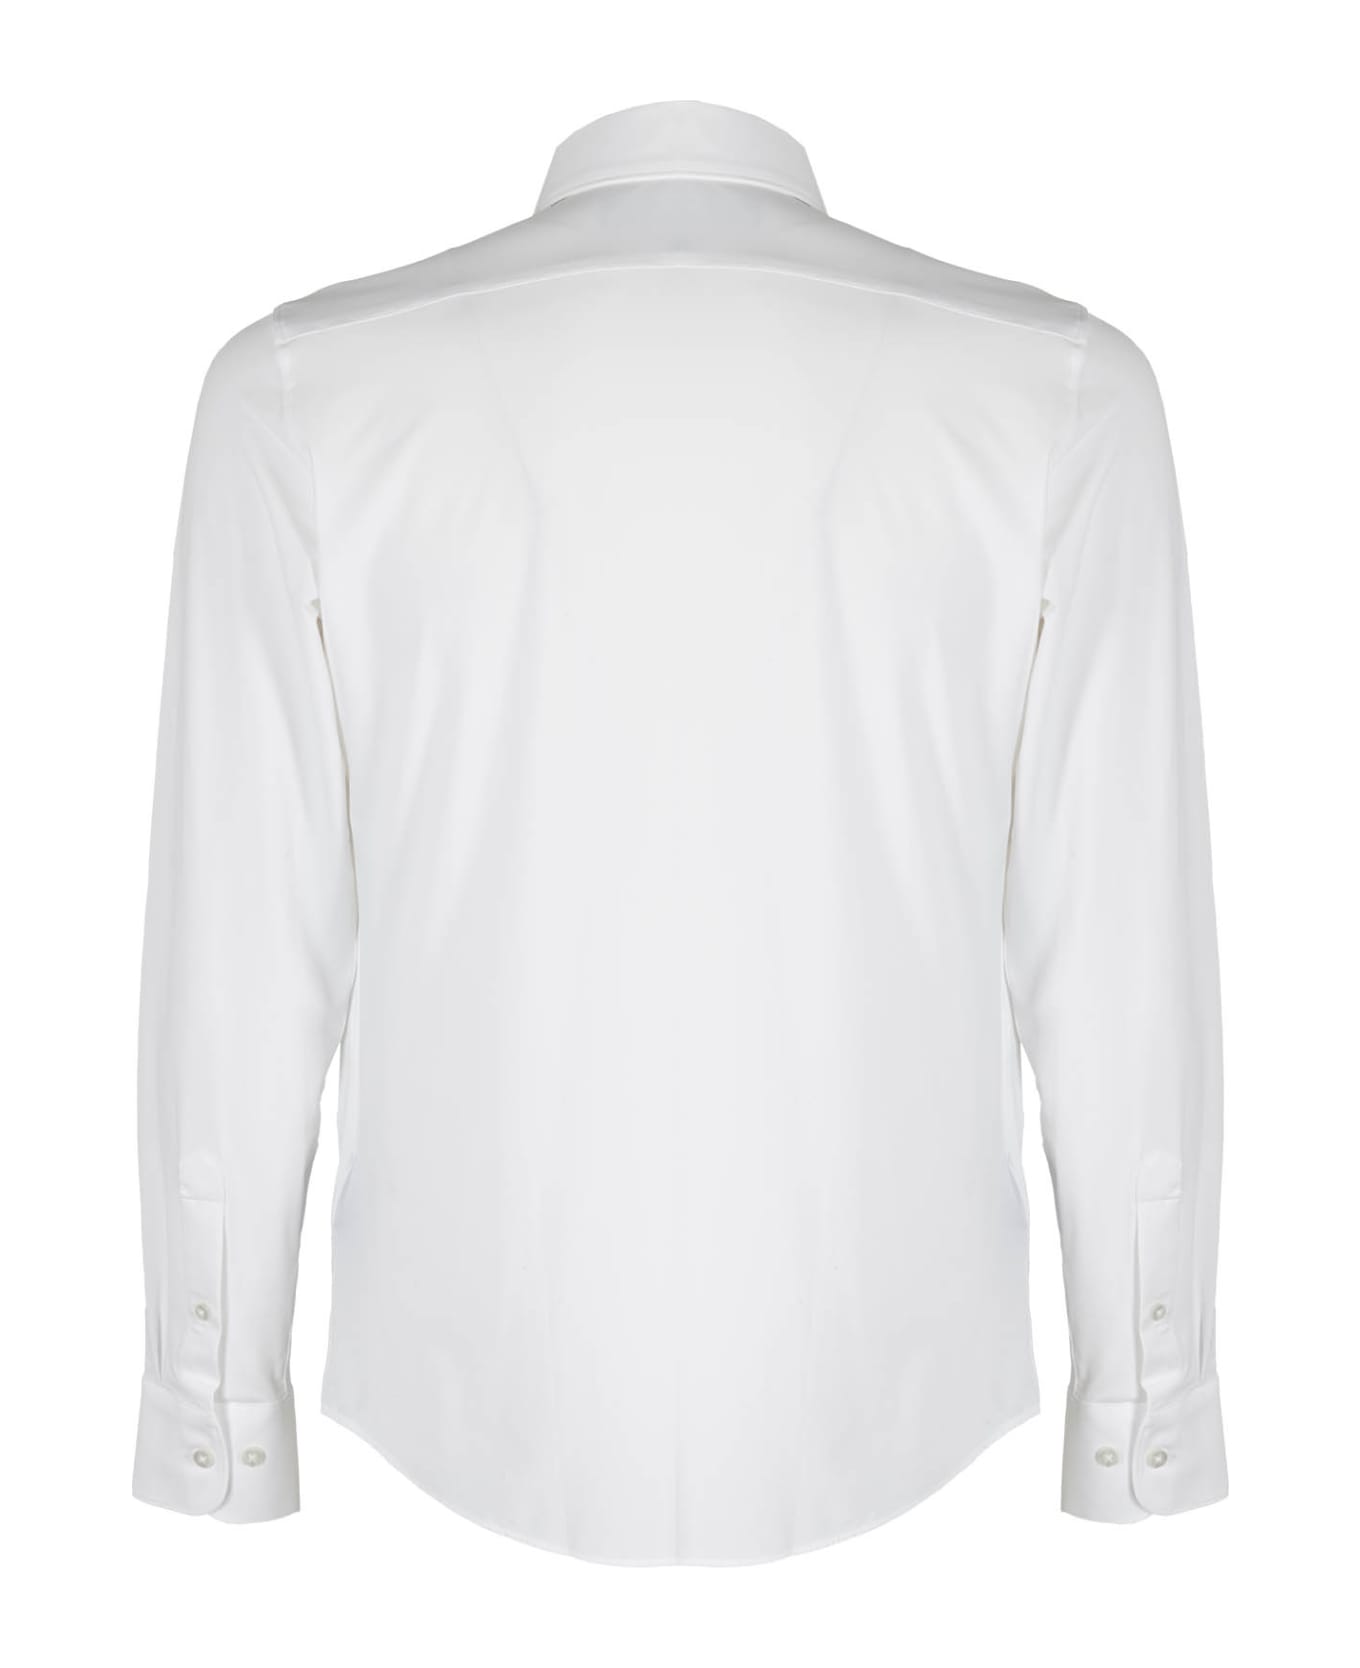 RRD - Roberto Ricci Design Oxford Oper Shirt - Bianco シャツ